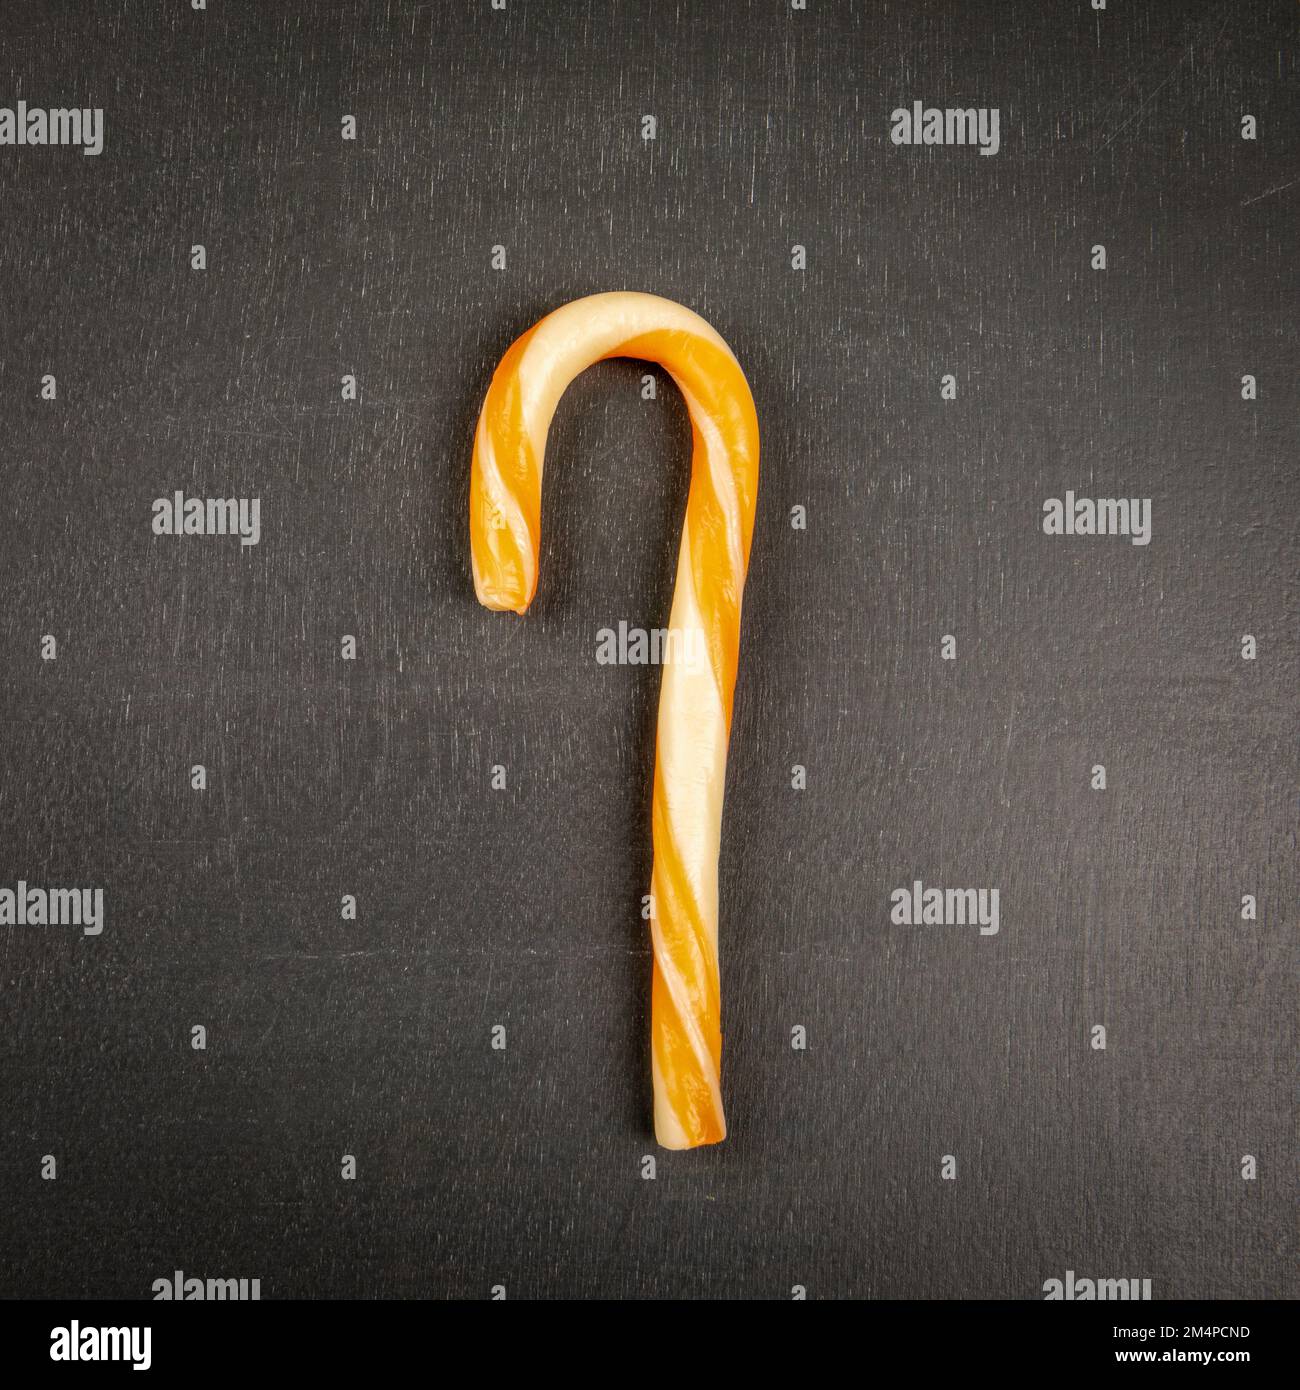 Orange cane candy, lollipop on a dark chalkboard background. Stock Photo